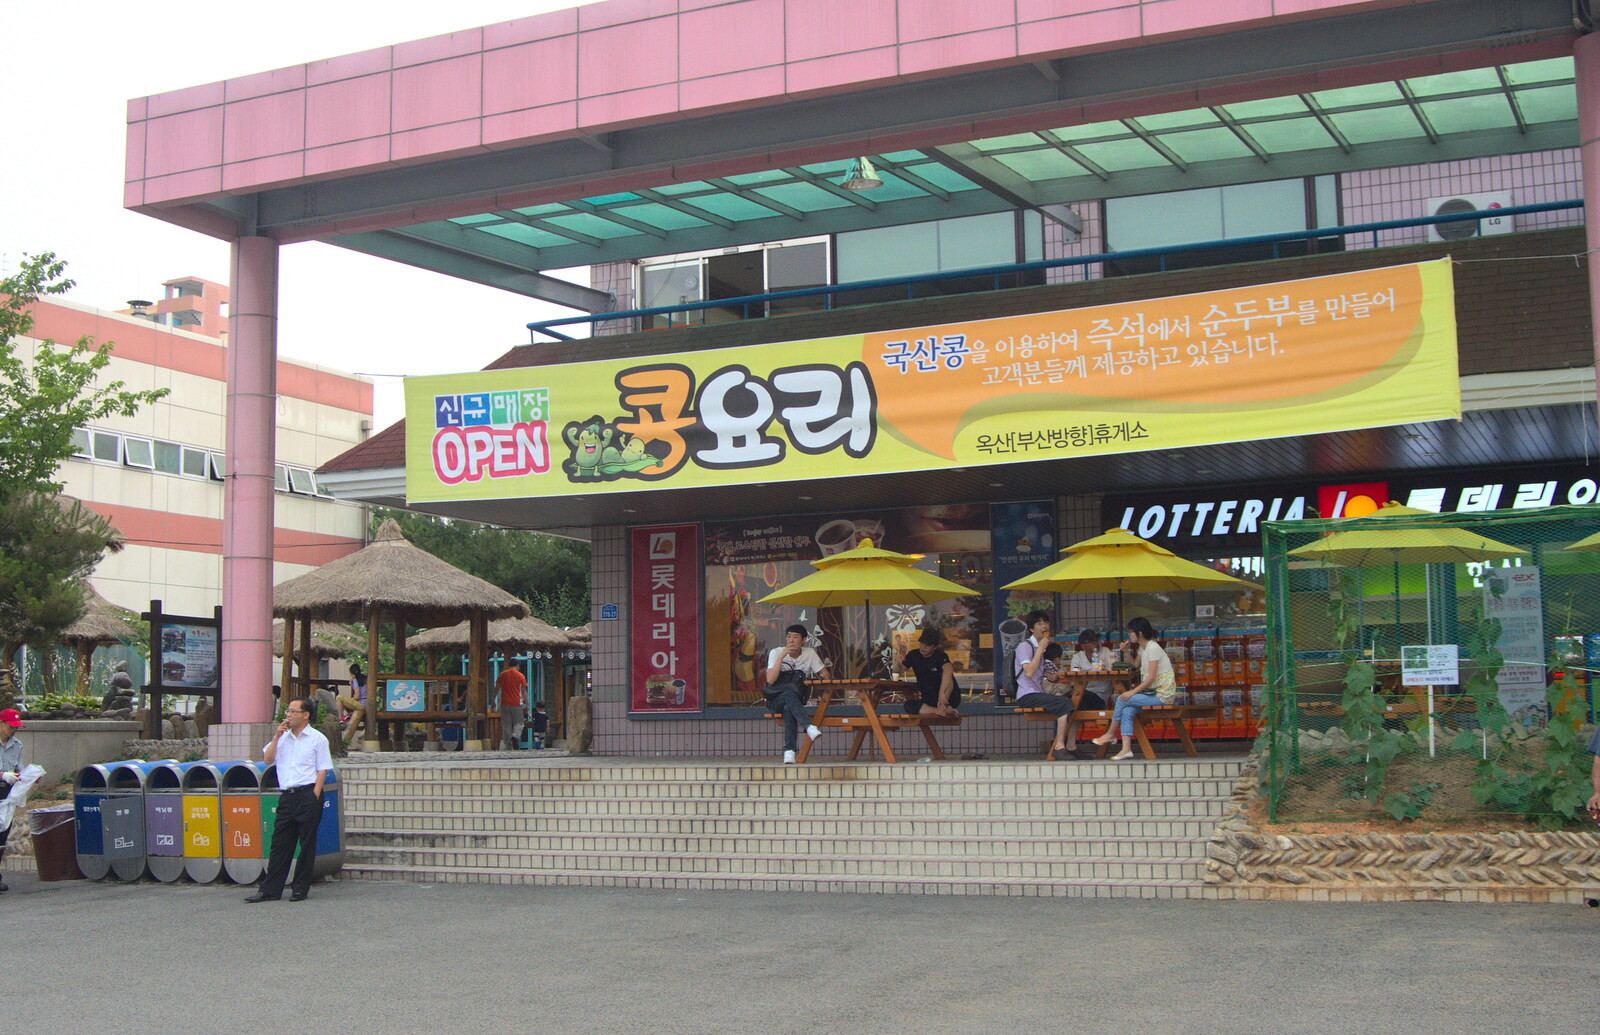 Bus station shopping mall from Working at Samsung, and Geumosan Mountain, Gumi, Gyeongsangbuk-do, Korea - 24th June 2012